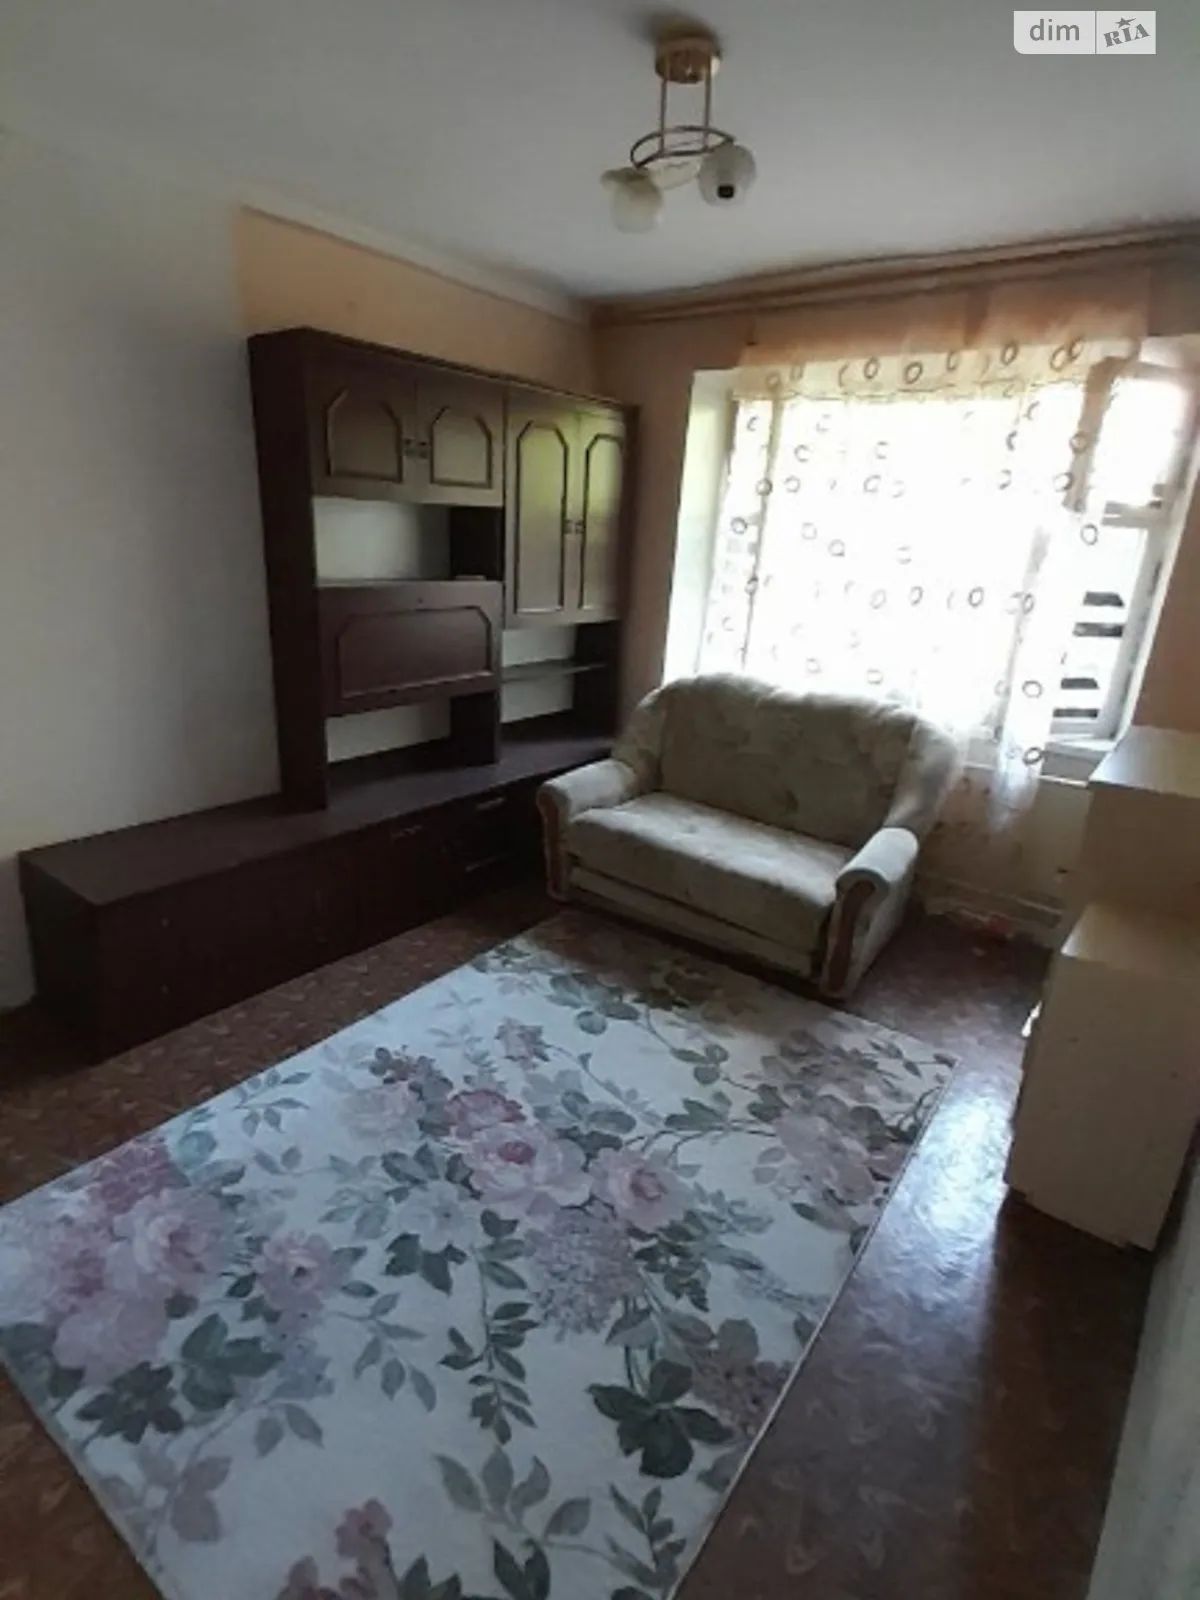 Продается комната 20.8 кв. м в Одессе, цена: 19000 $ - фото 1